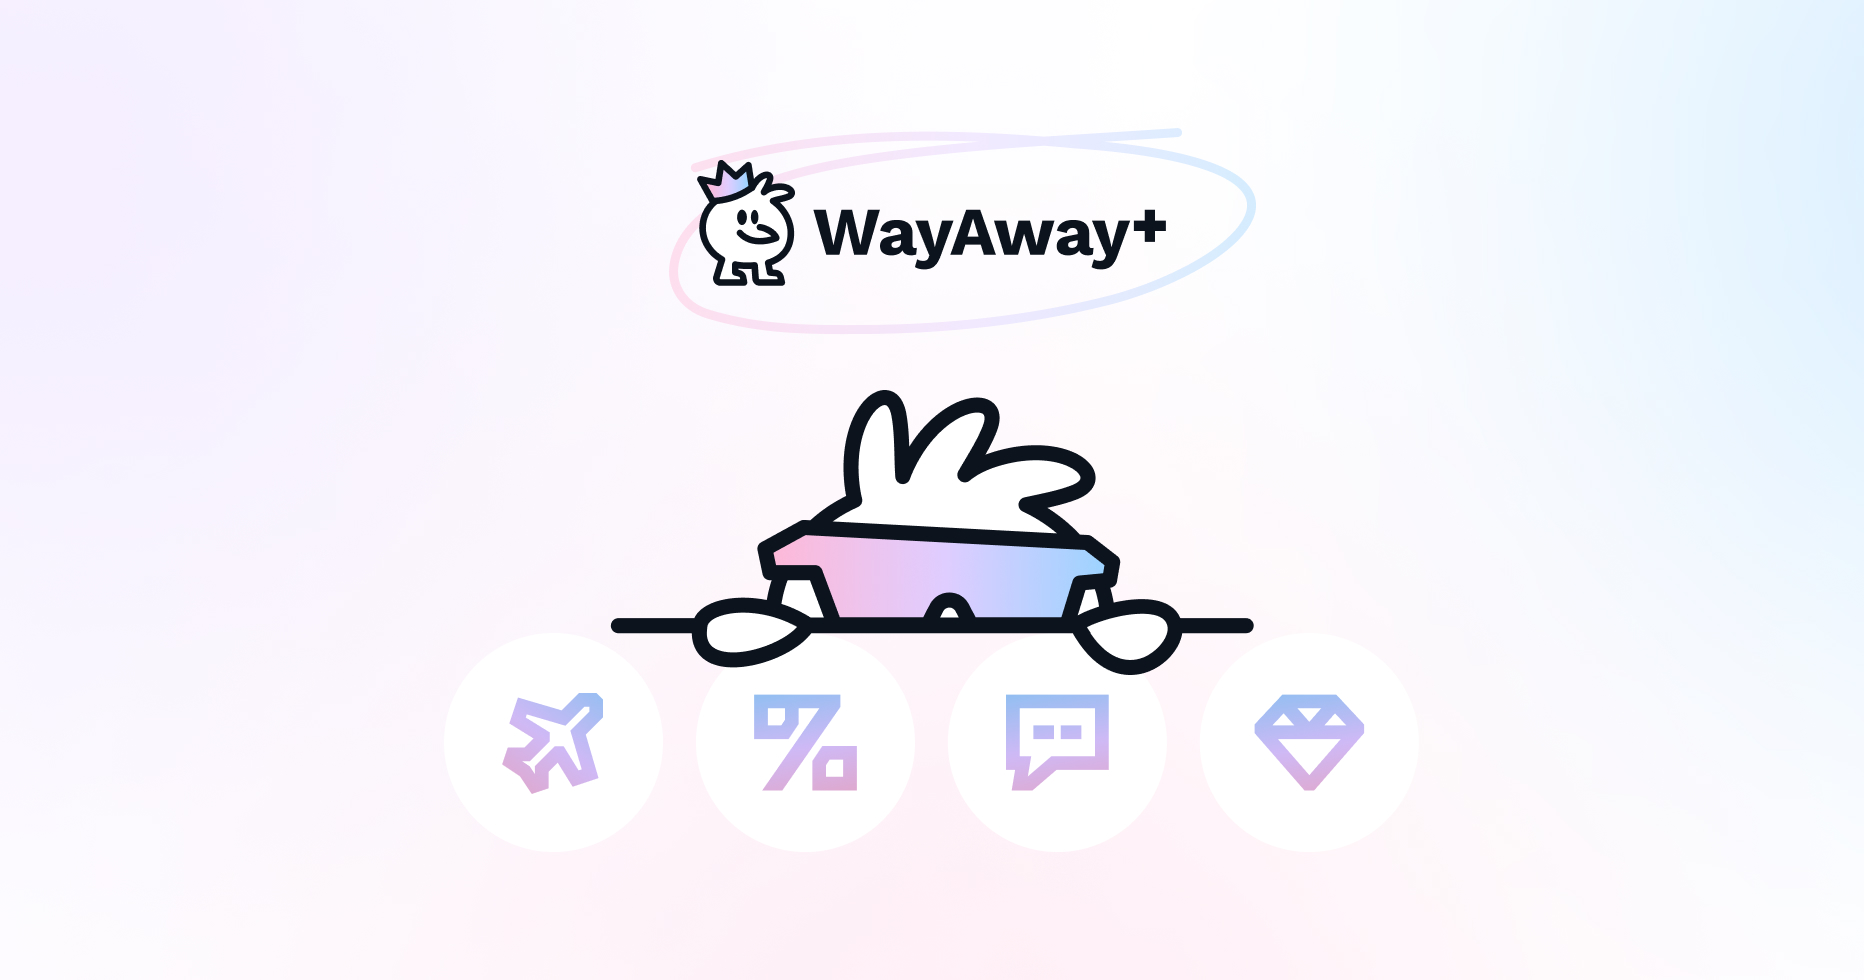 WayAway Plus: Get more cash by promoting cashback